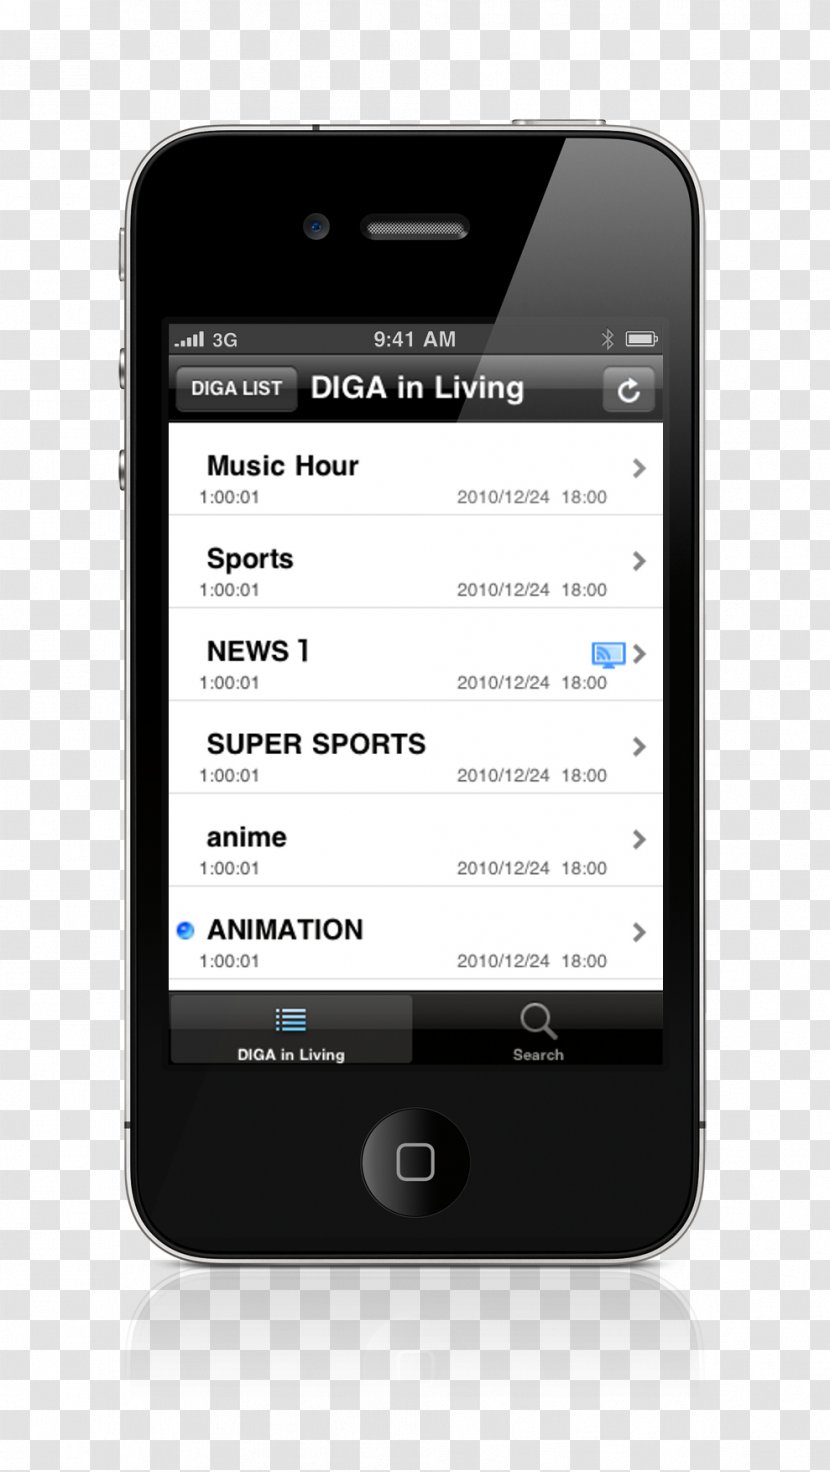 Feature Phone Smartphone DIGA Panasonic IPhone - Handheld Devices Transparent PNG